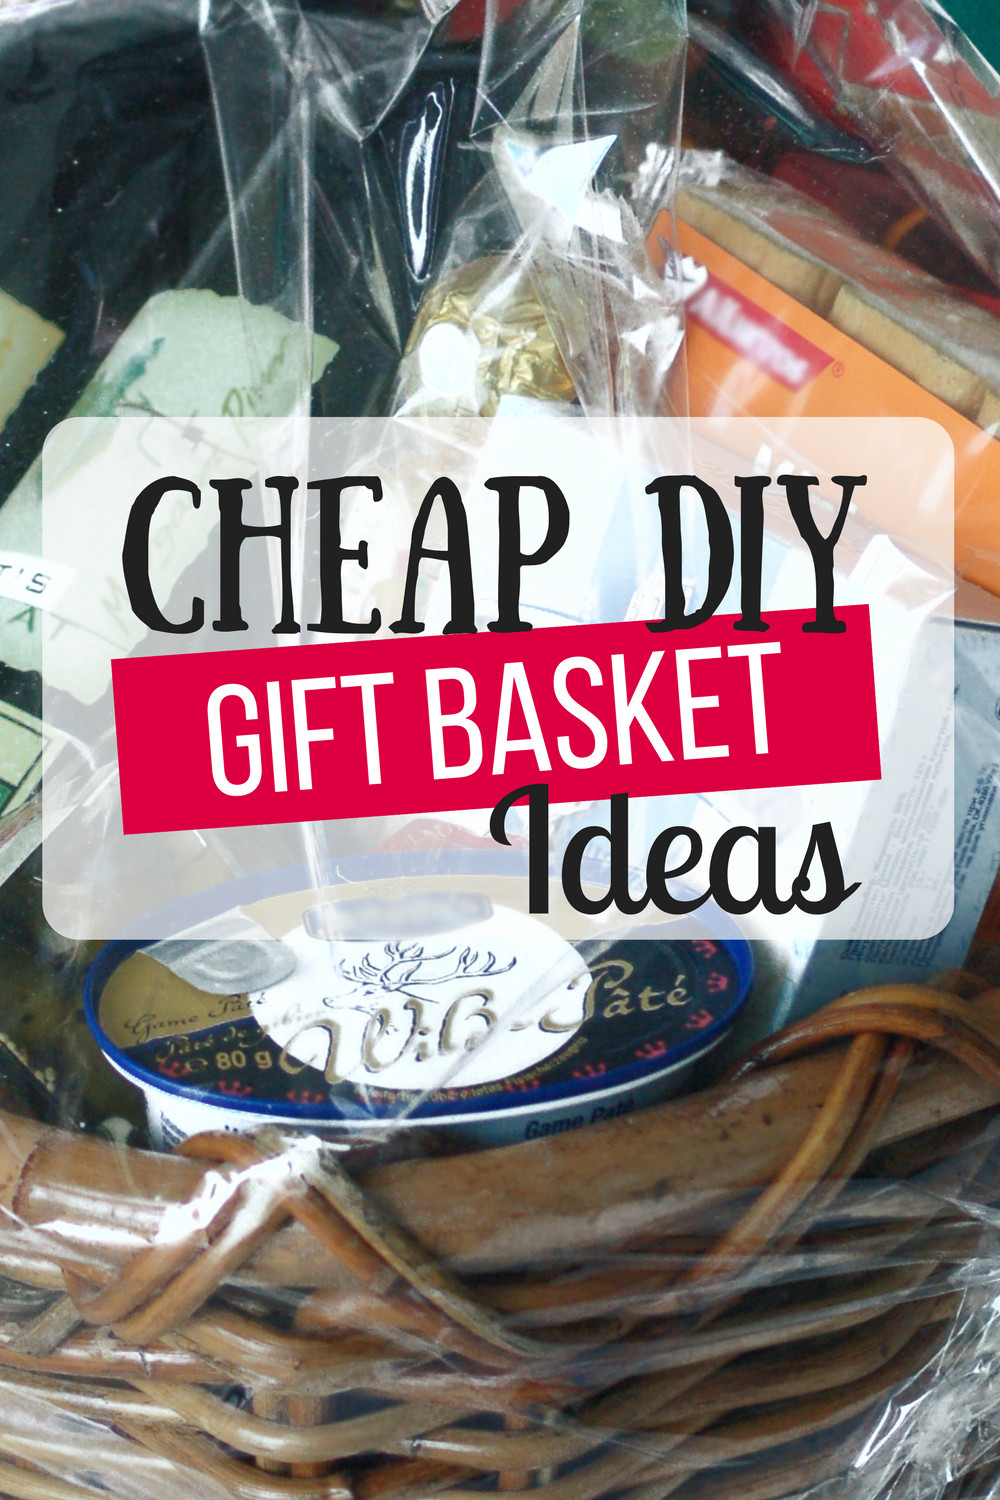 Cheap Homemade Gift Basket Ideas
 Cheap DIY Gift Baskets The Busy Bud er